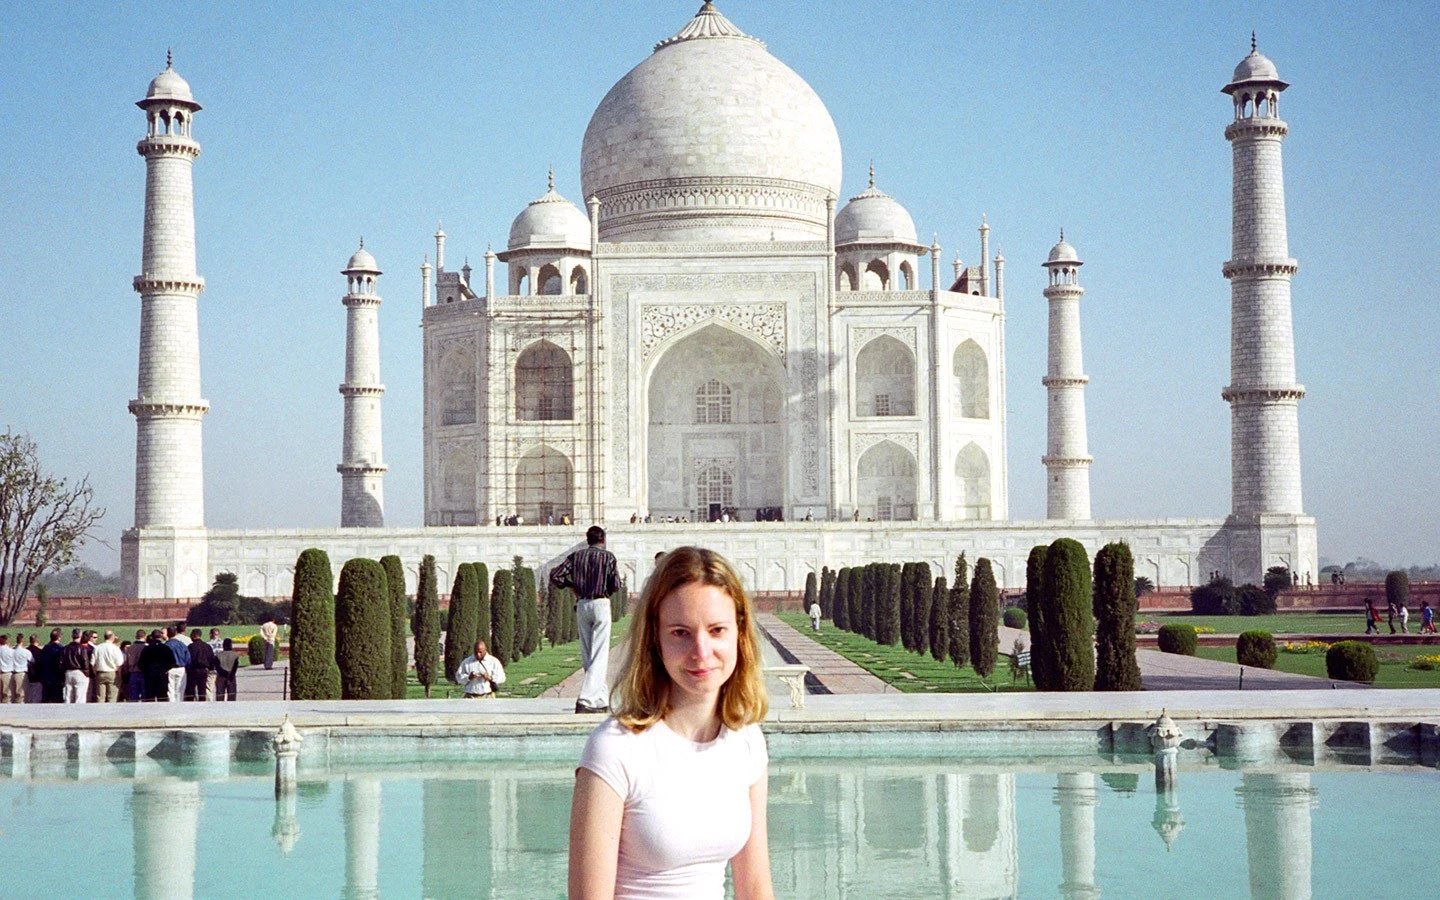 Lucy at the Taj Mahal, India